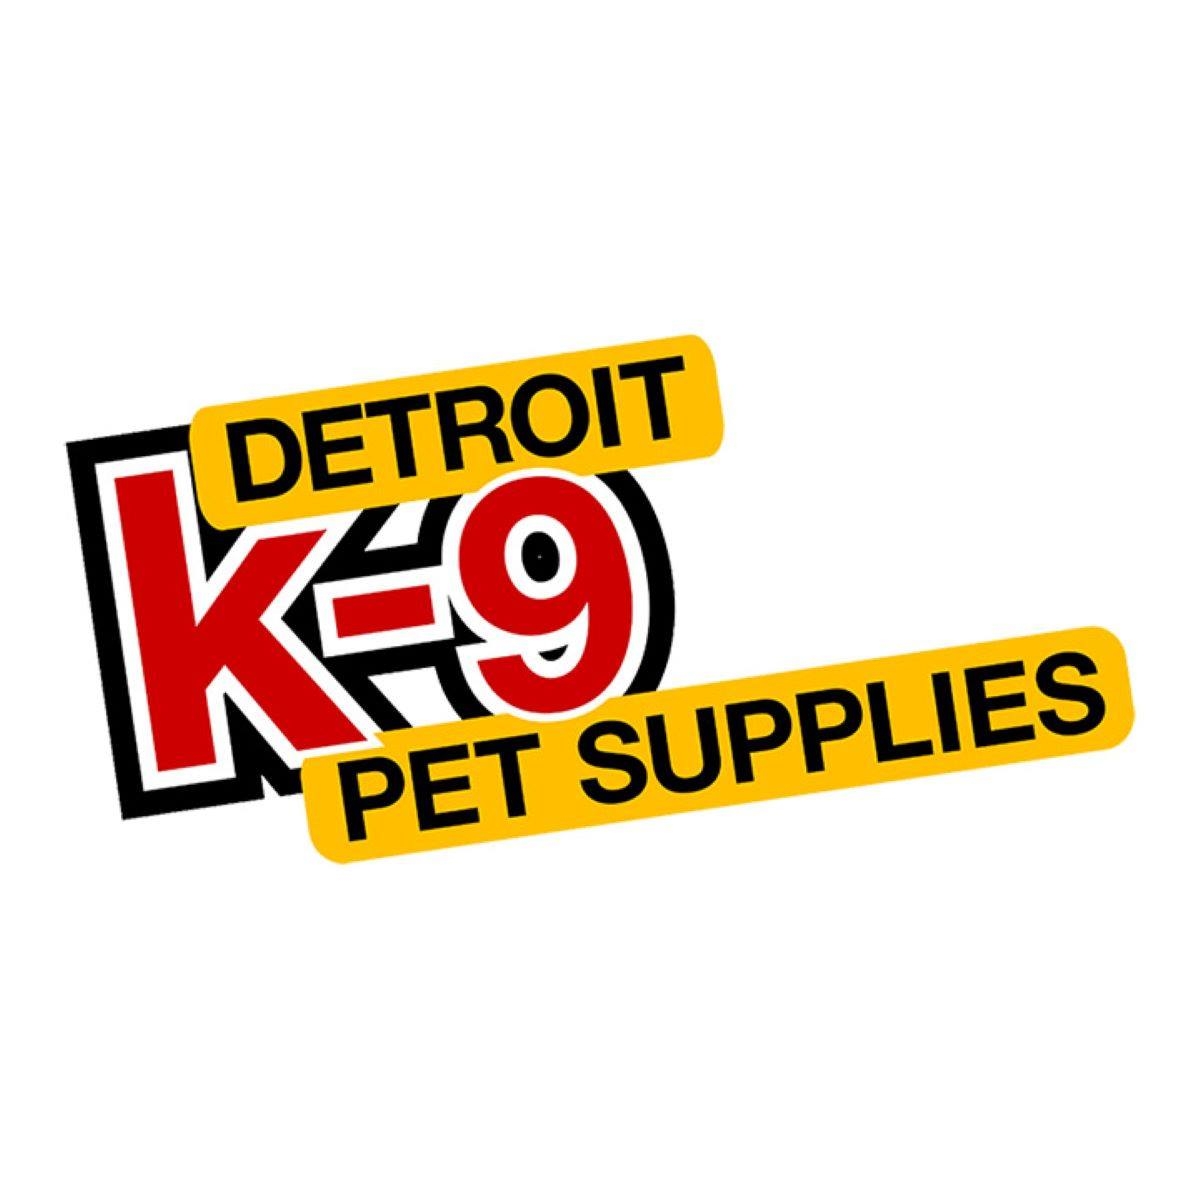 Company logo of Detroit K-9 Pet supplies